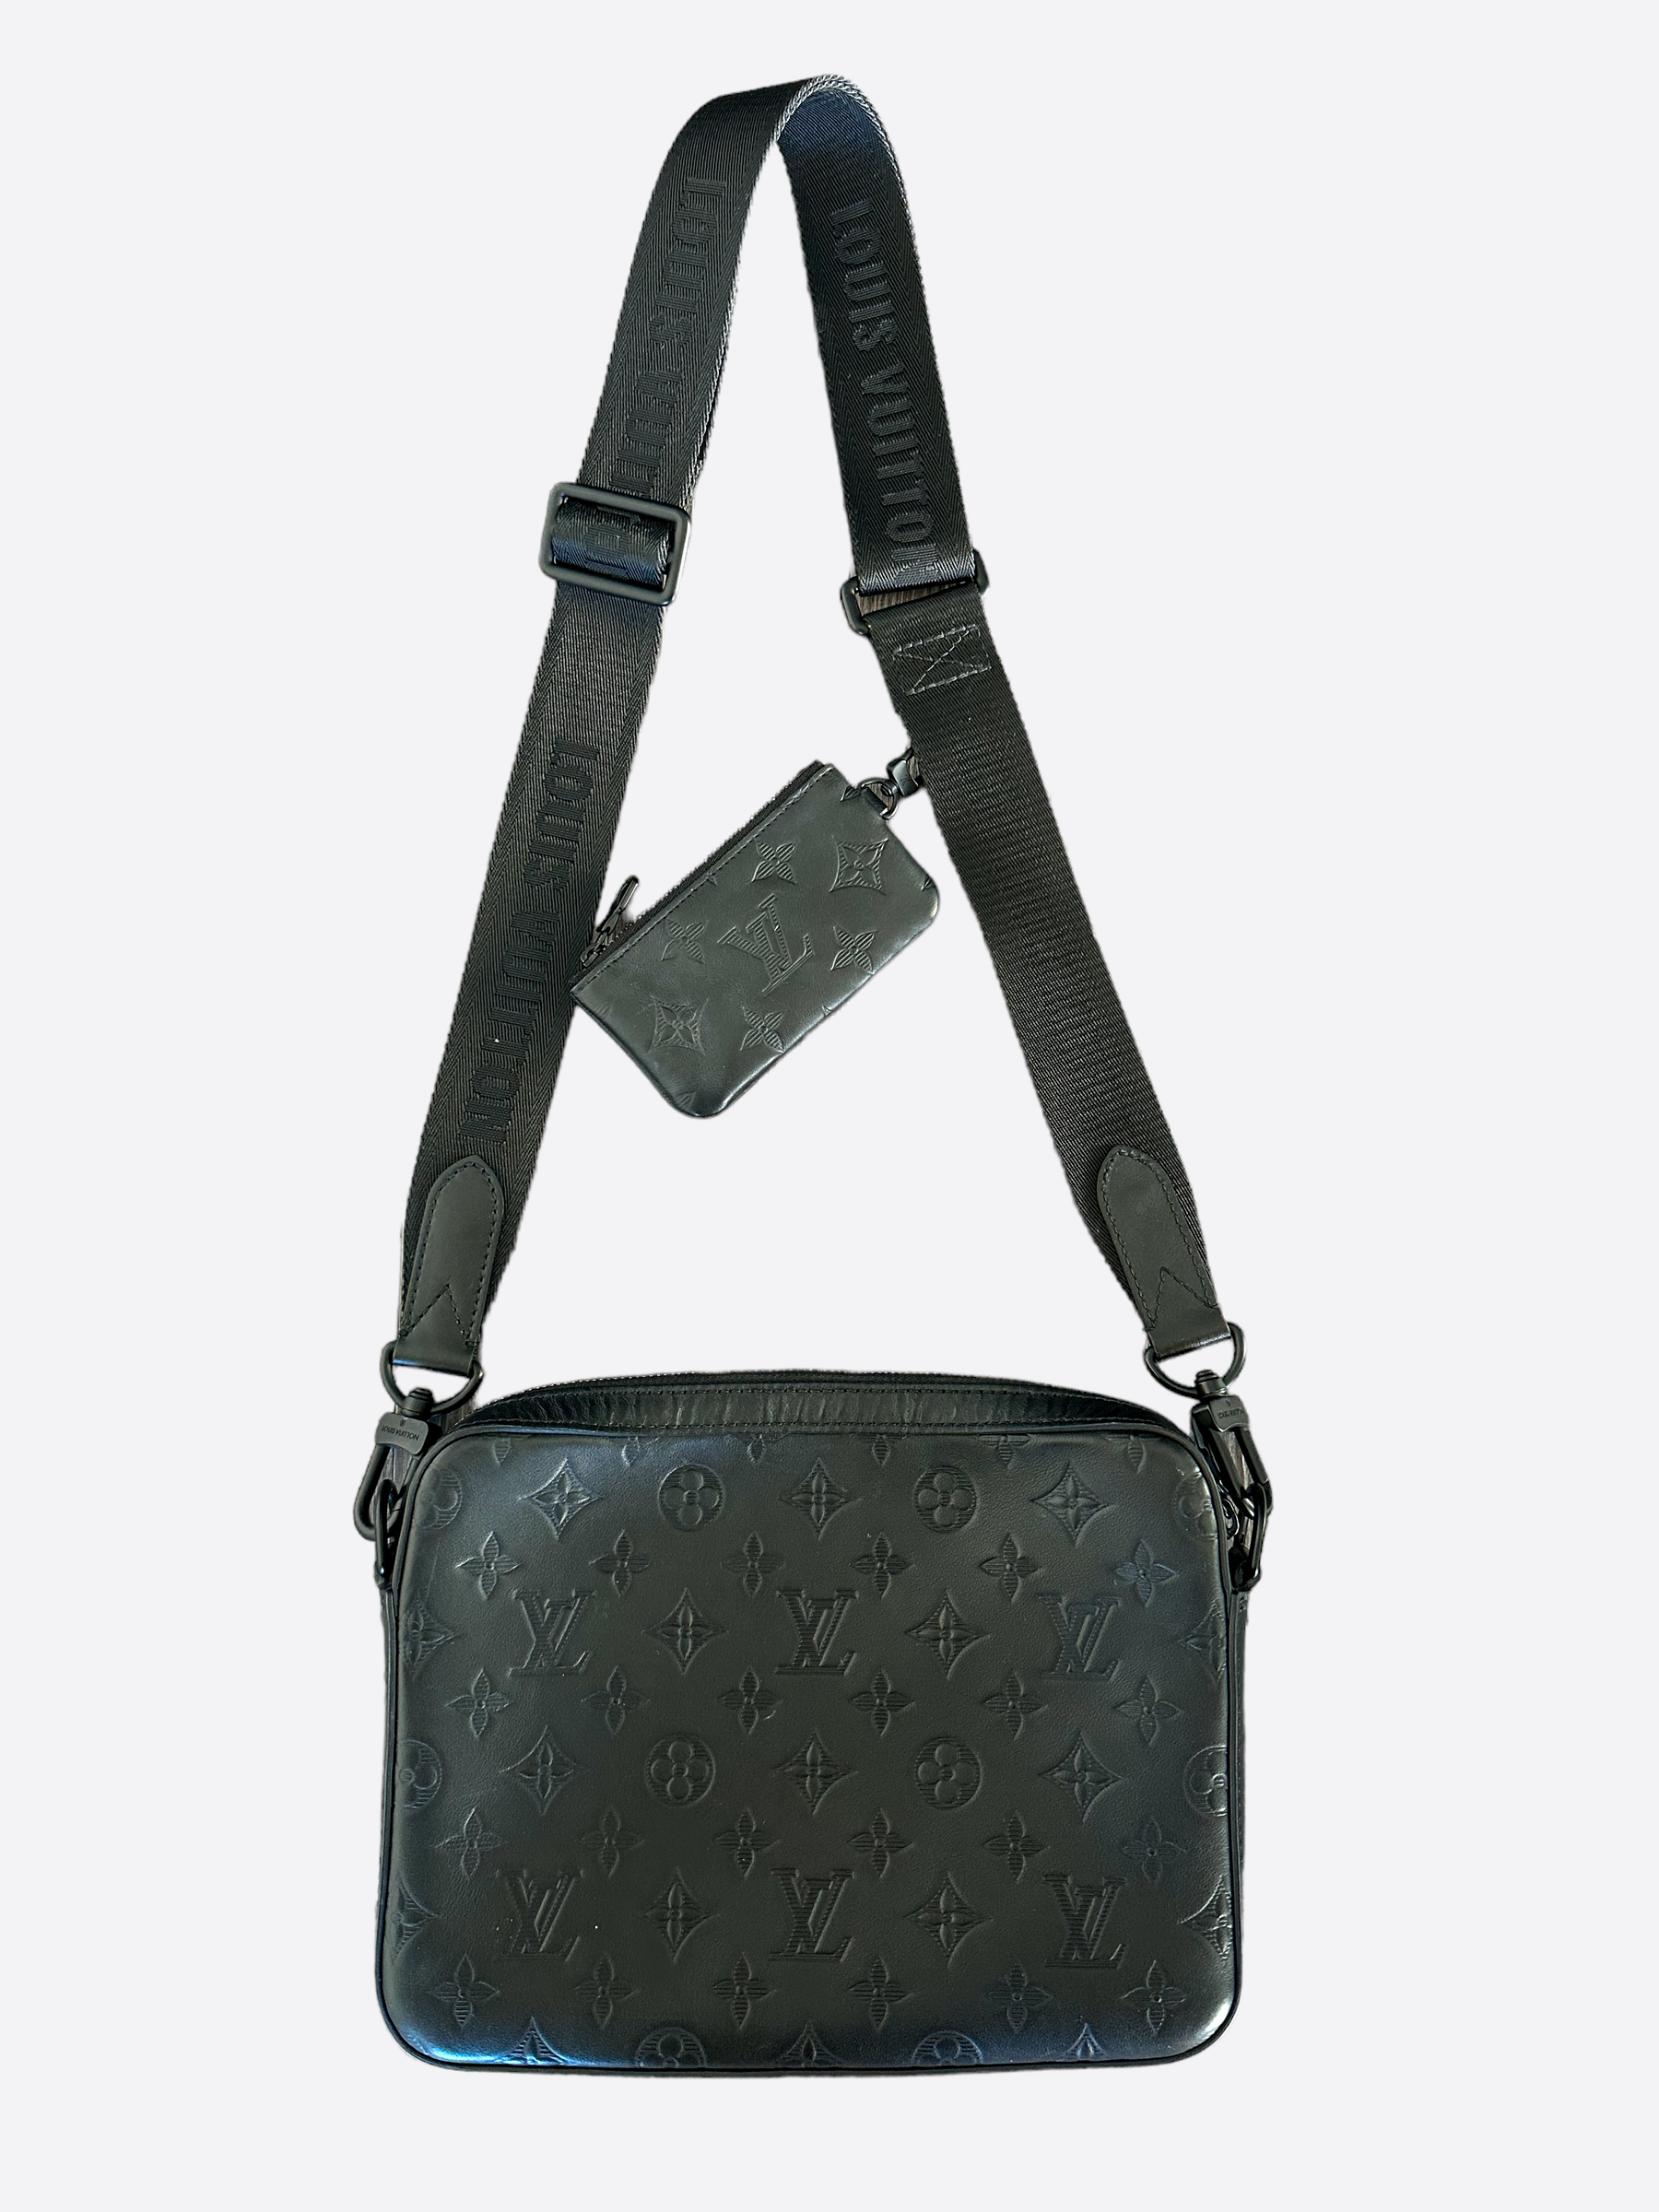 Duo Messenger Bag Luxury - Ramadan Gift Idea - Monogram Shadow Leather, Men